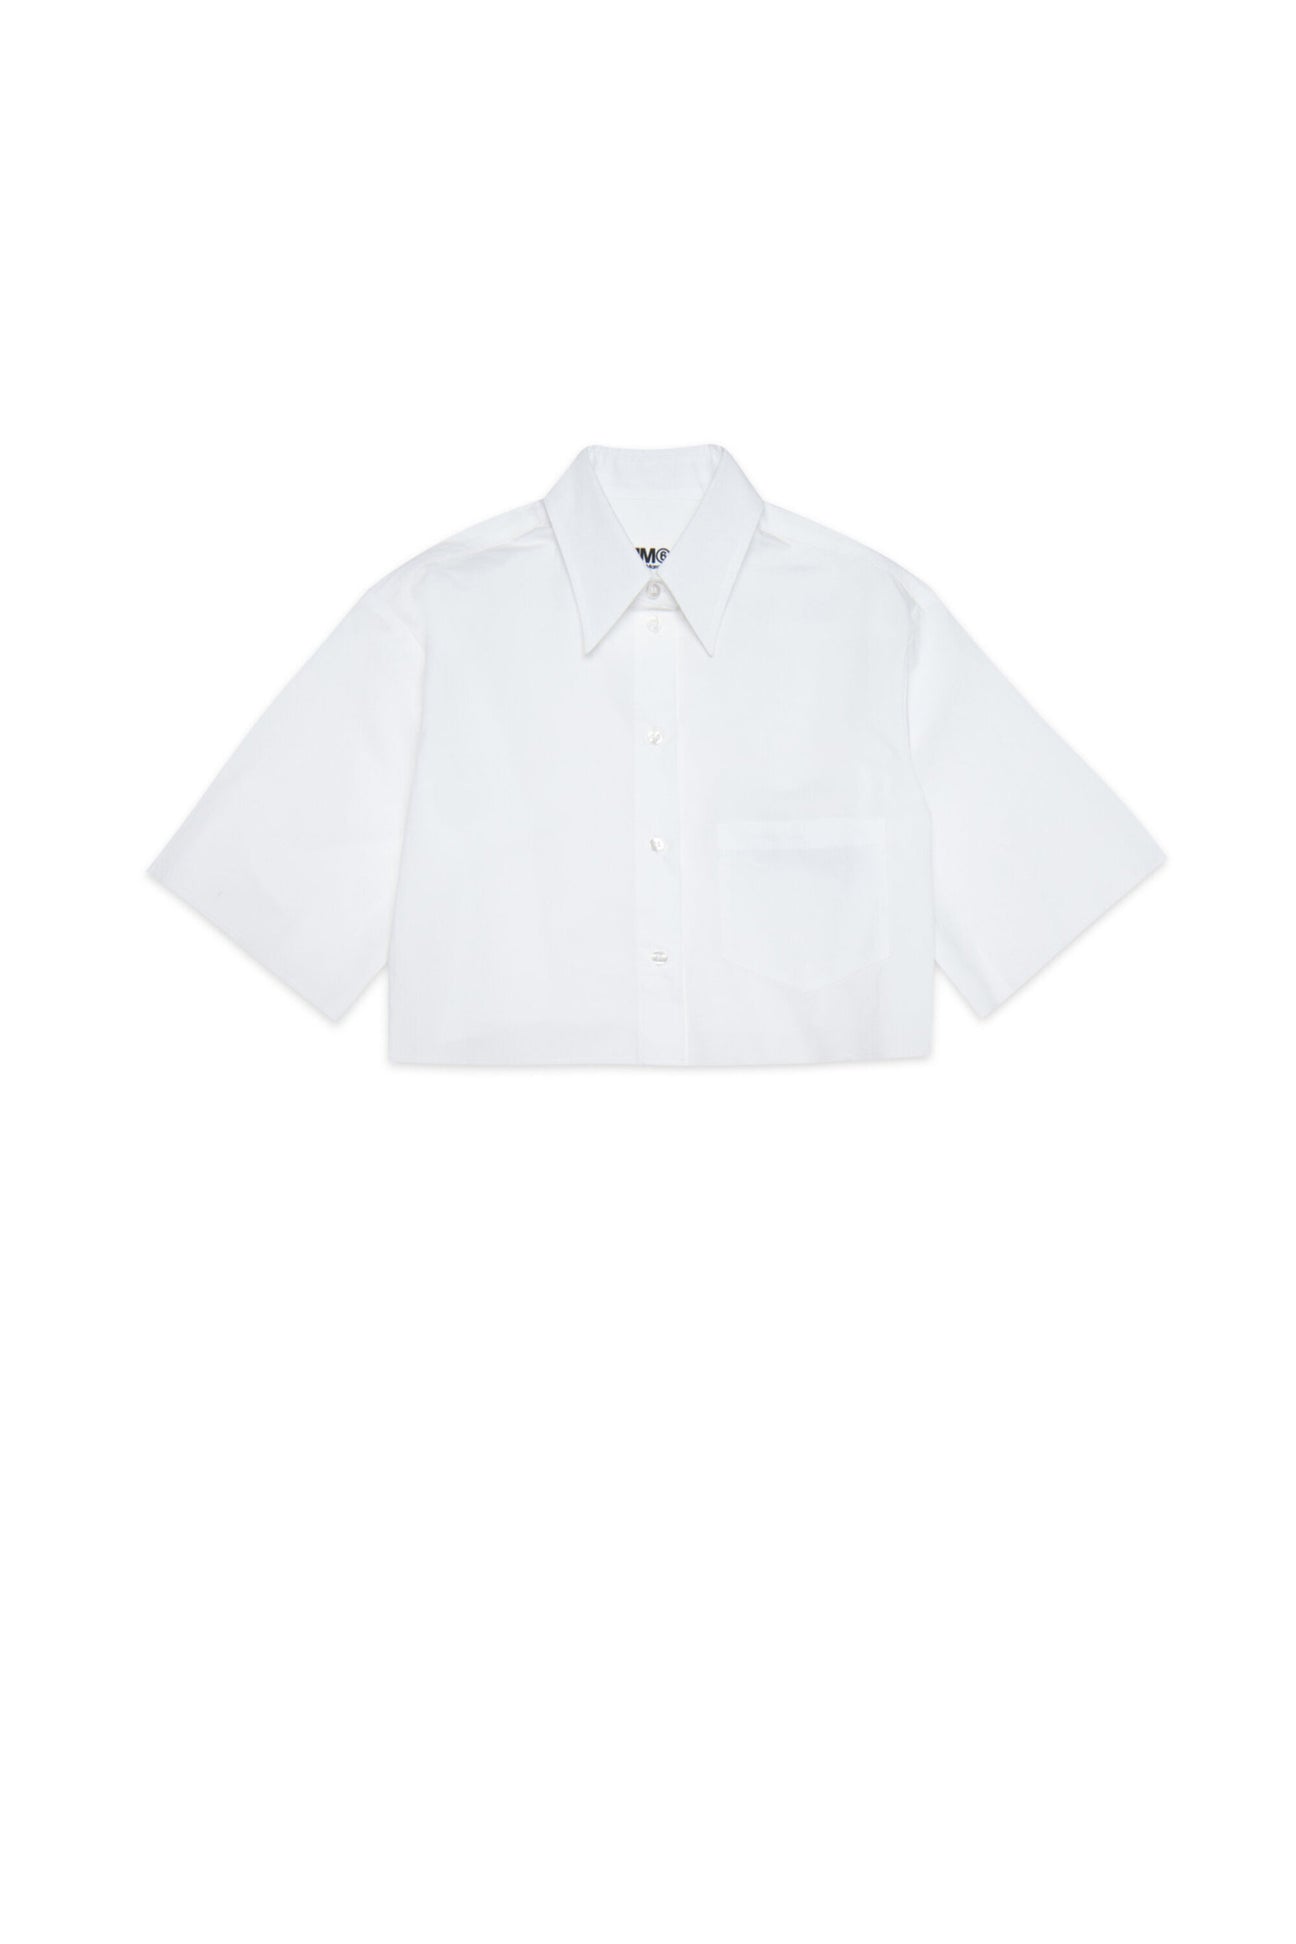 White cropped poplin shirt with minimal logo 